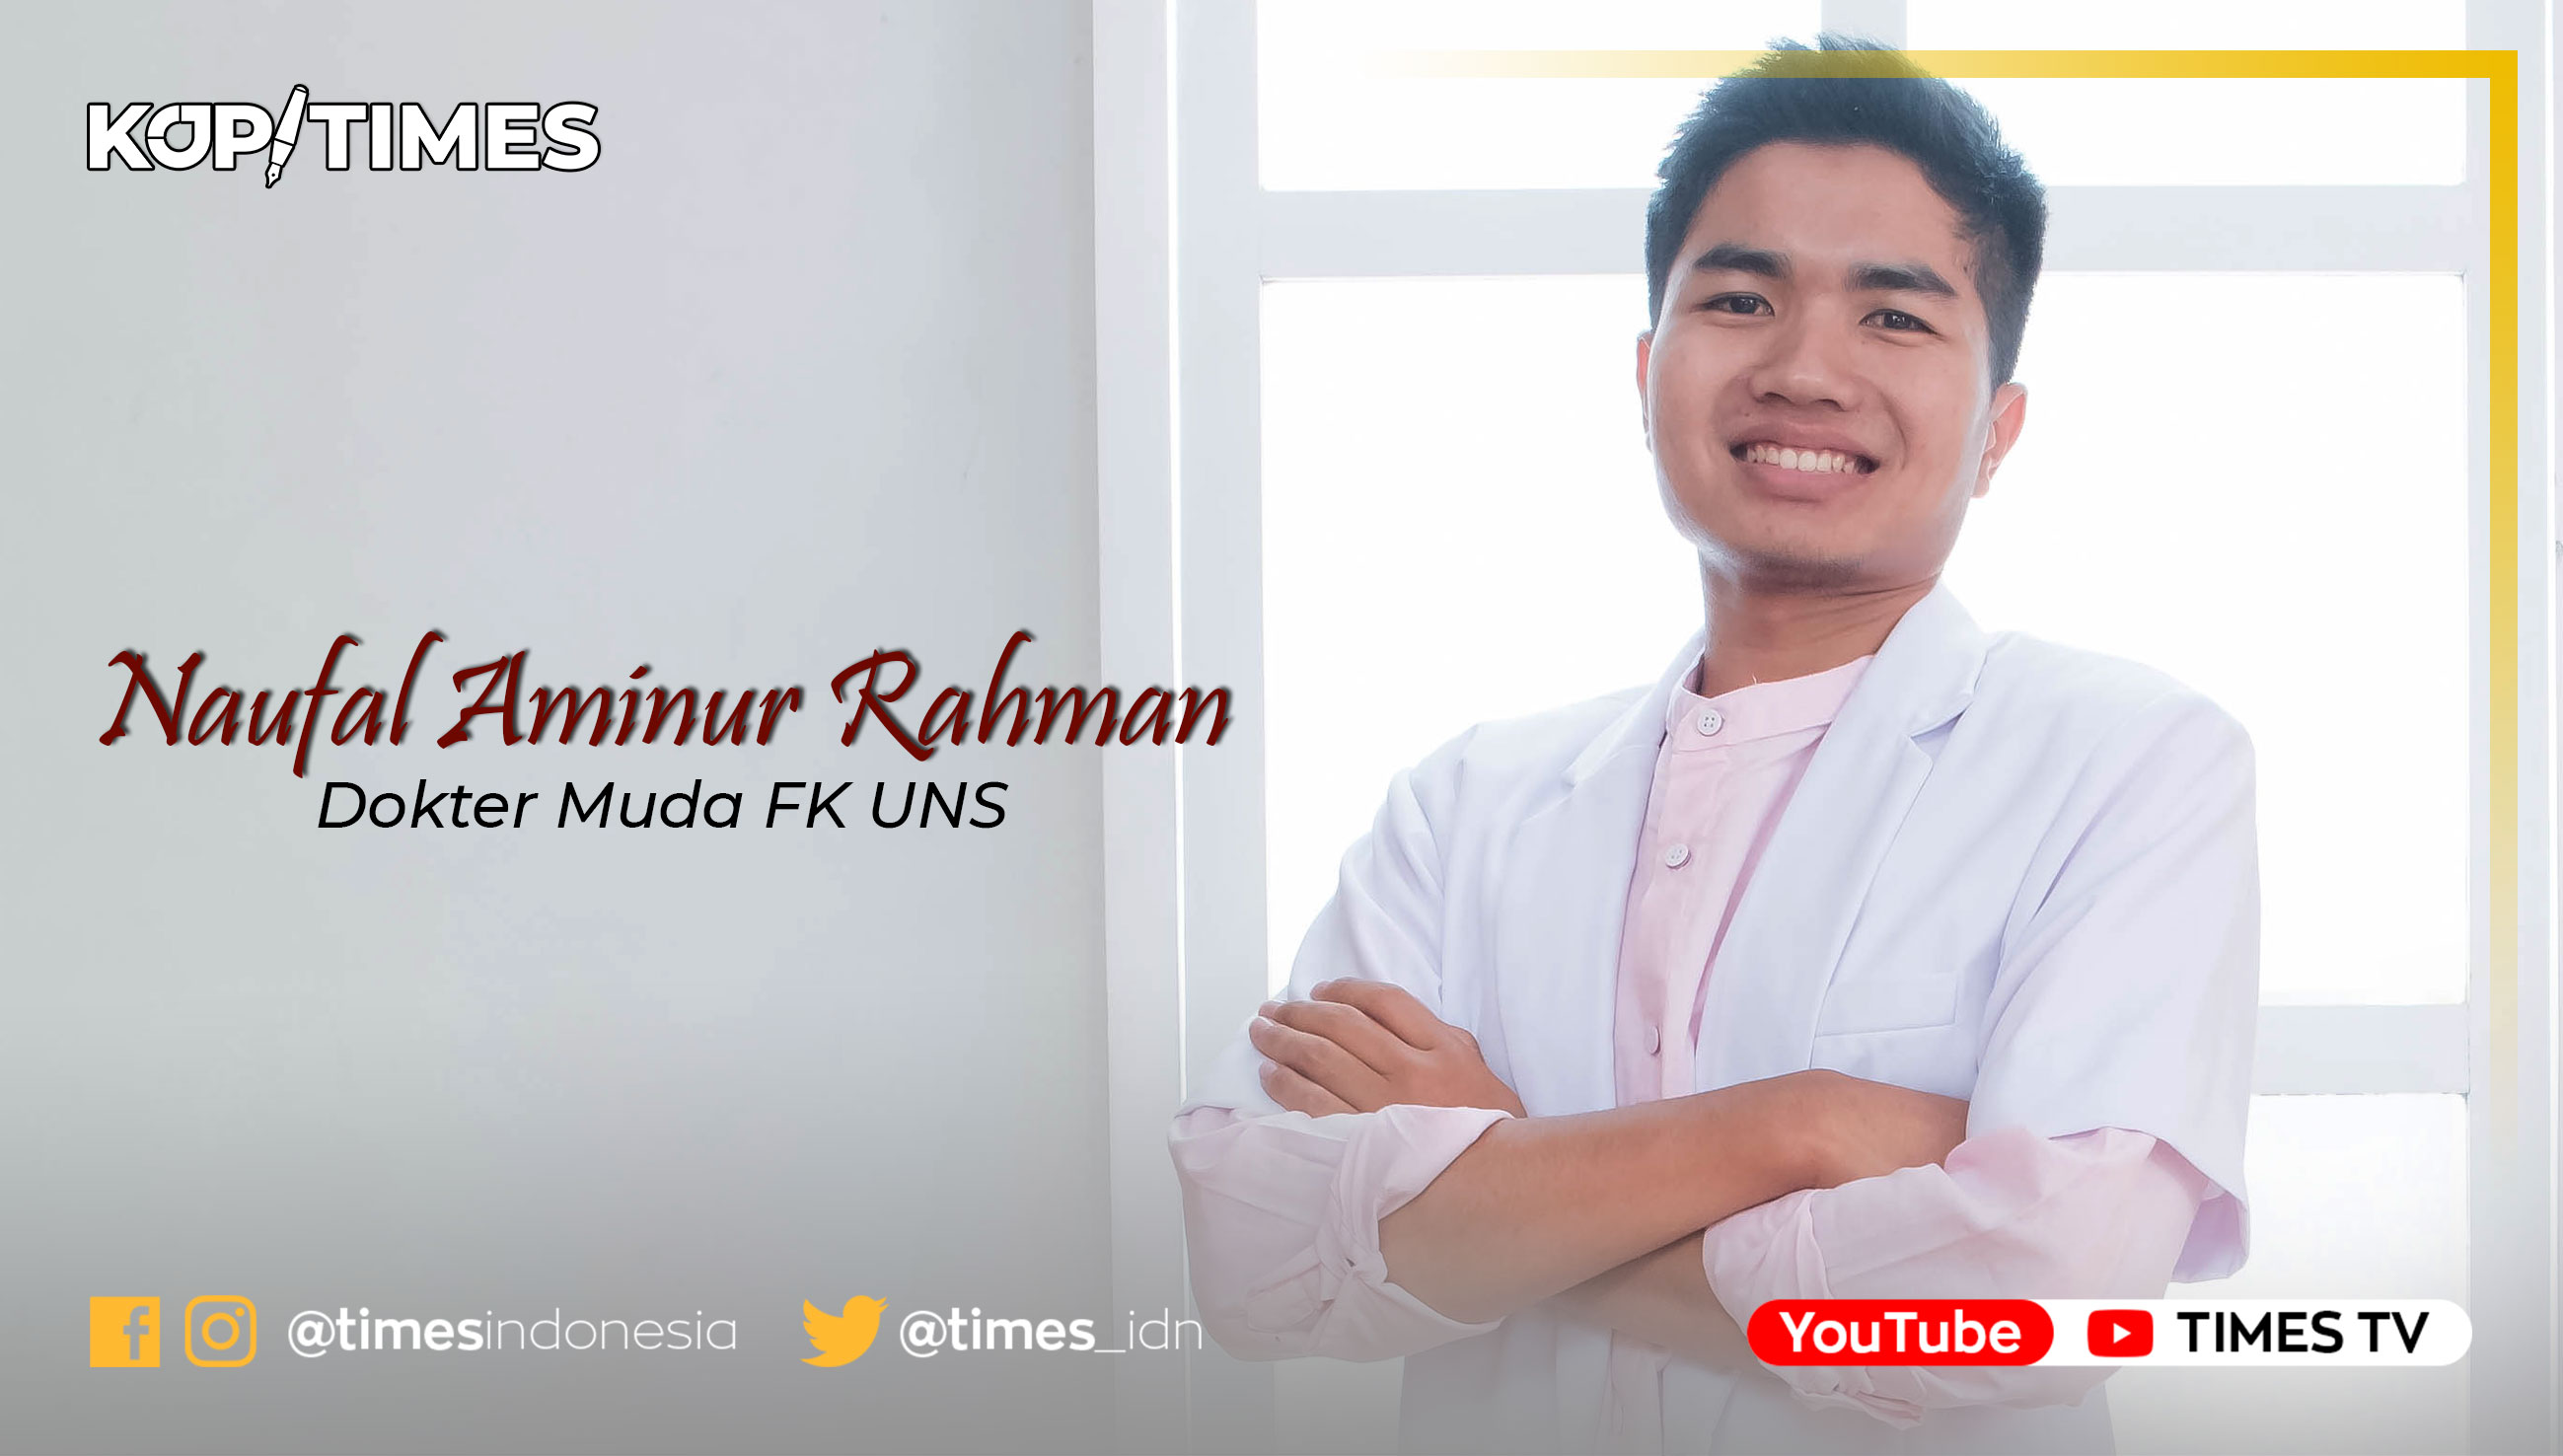 Naufal Aminur Rahman, Dokter Muda FK UNS / Inisiator Solo Lawan Corona.